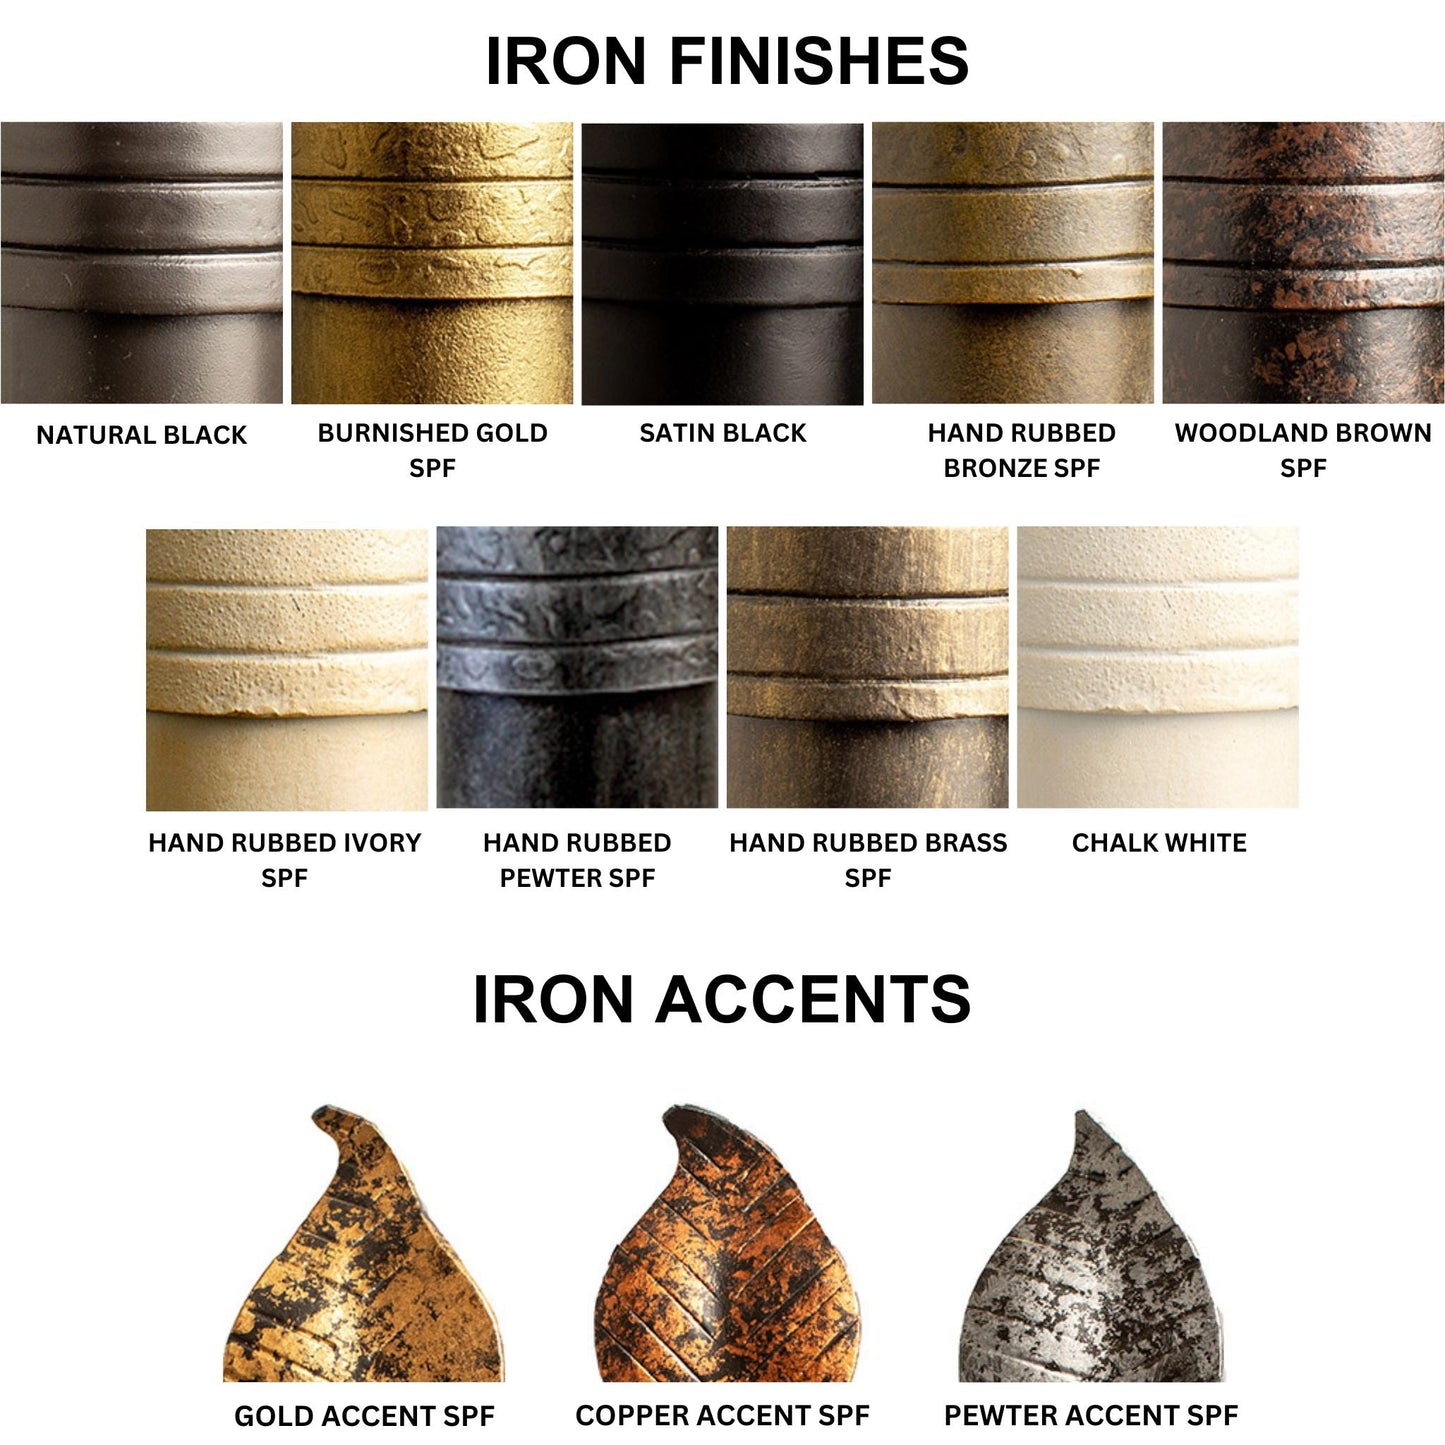 Stone County Ironworks Sassafras 32" Hand Rubbed Bronze Iron Towel Bar